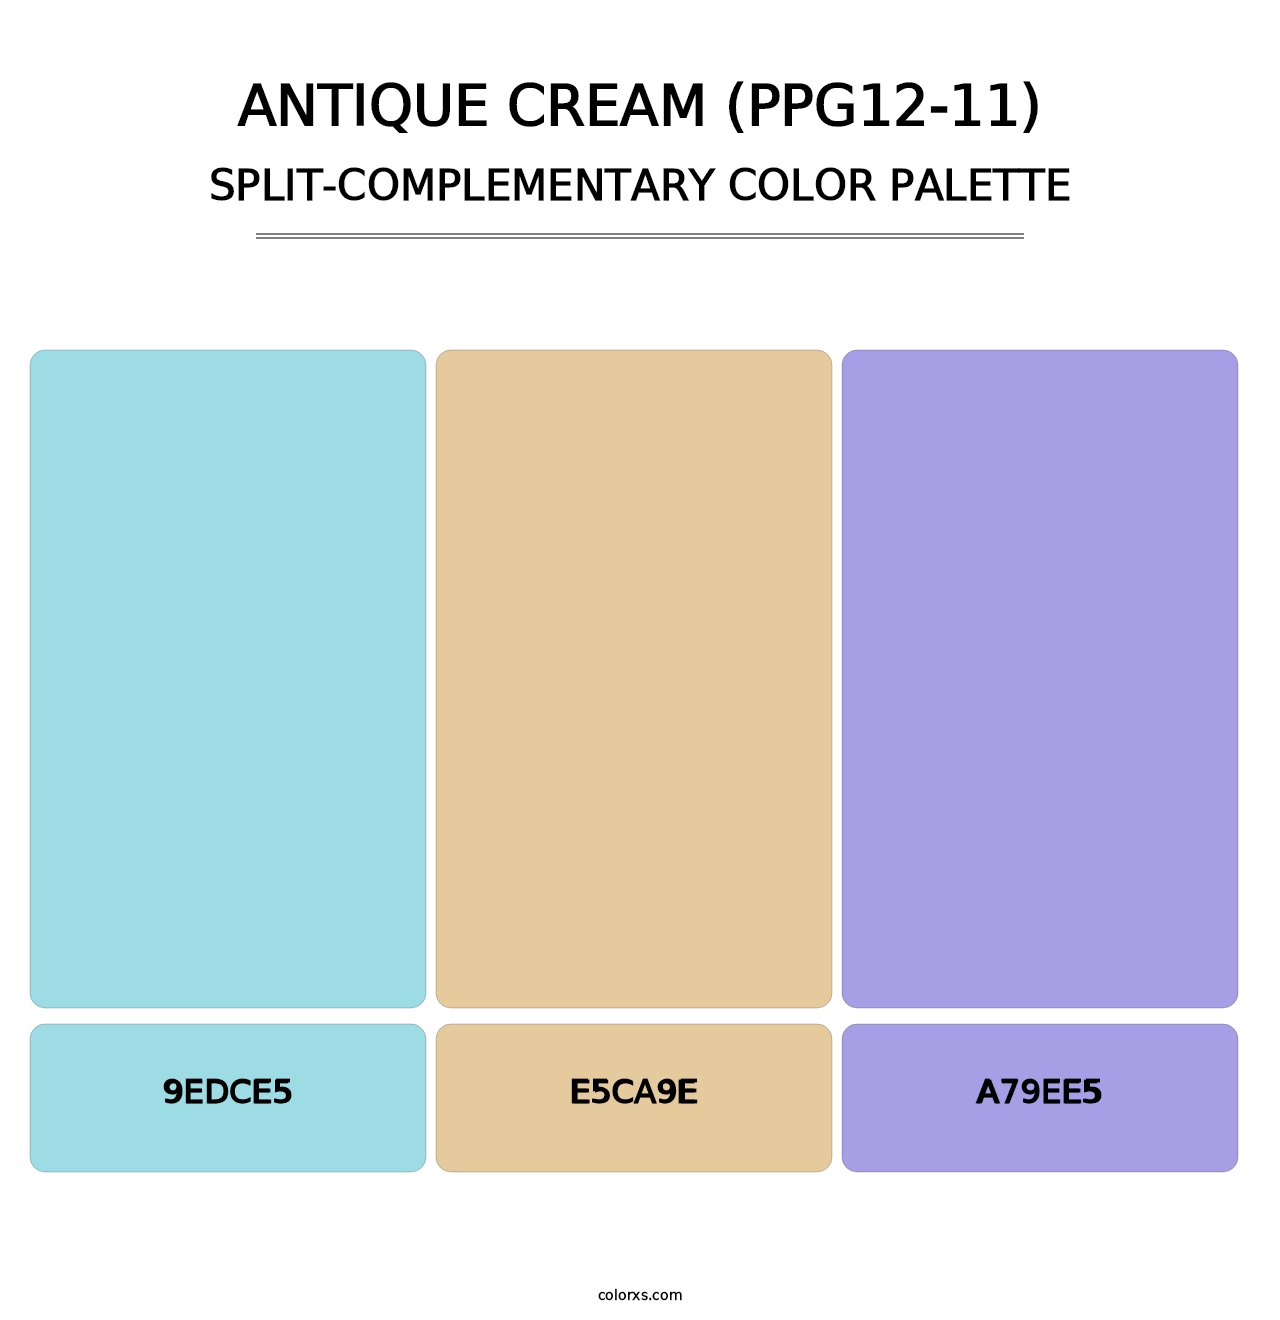 Antique Cream (PPG12-11) - Split-Complementary Color Palette